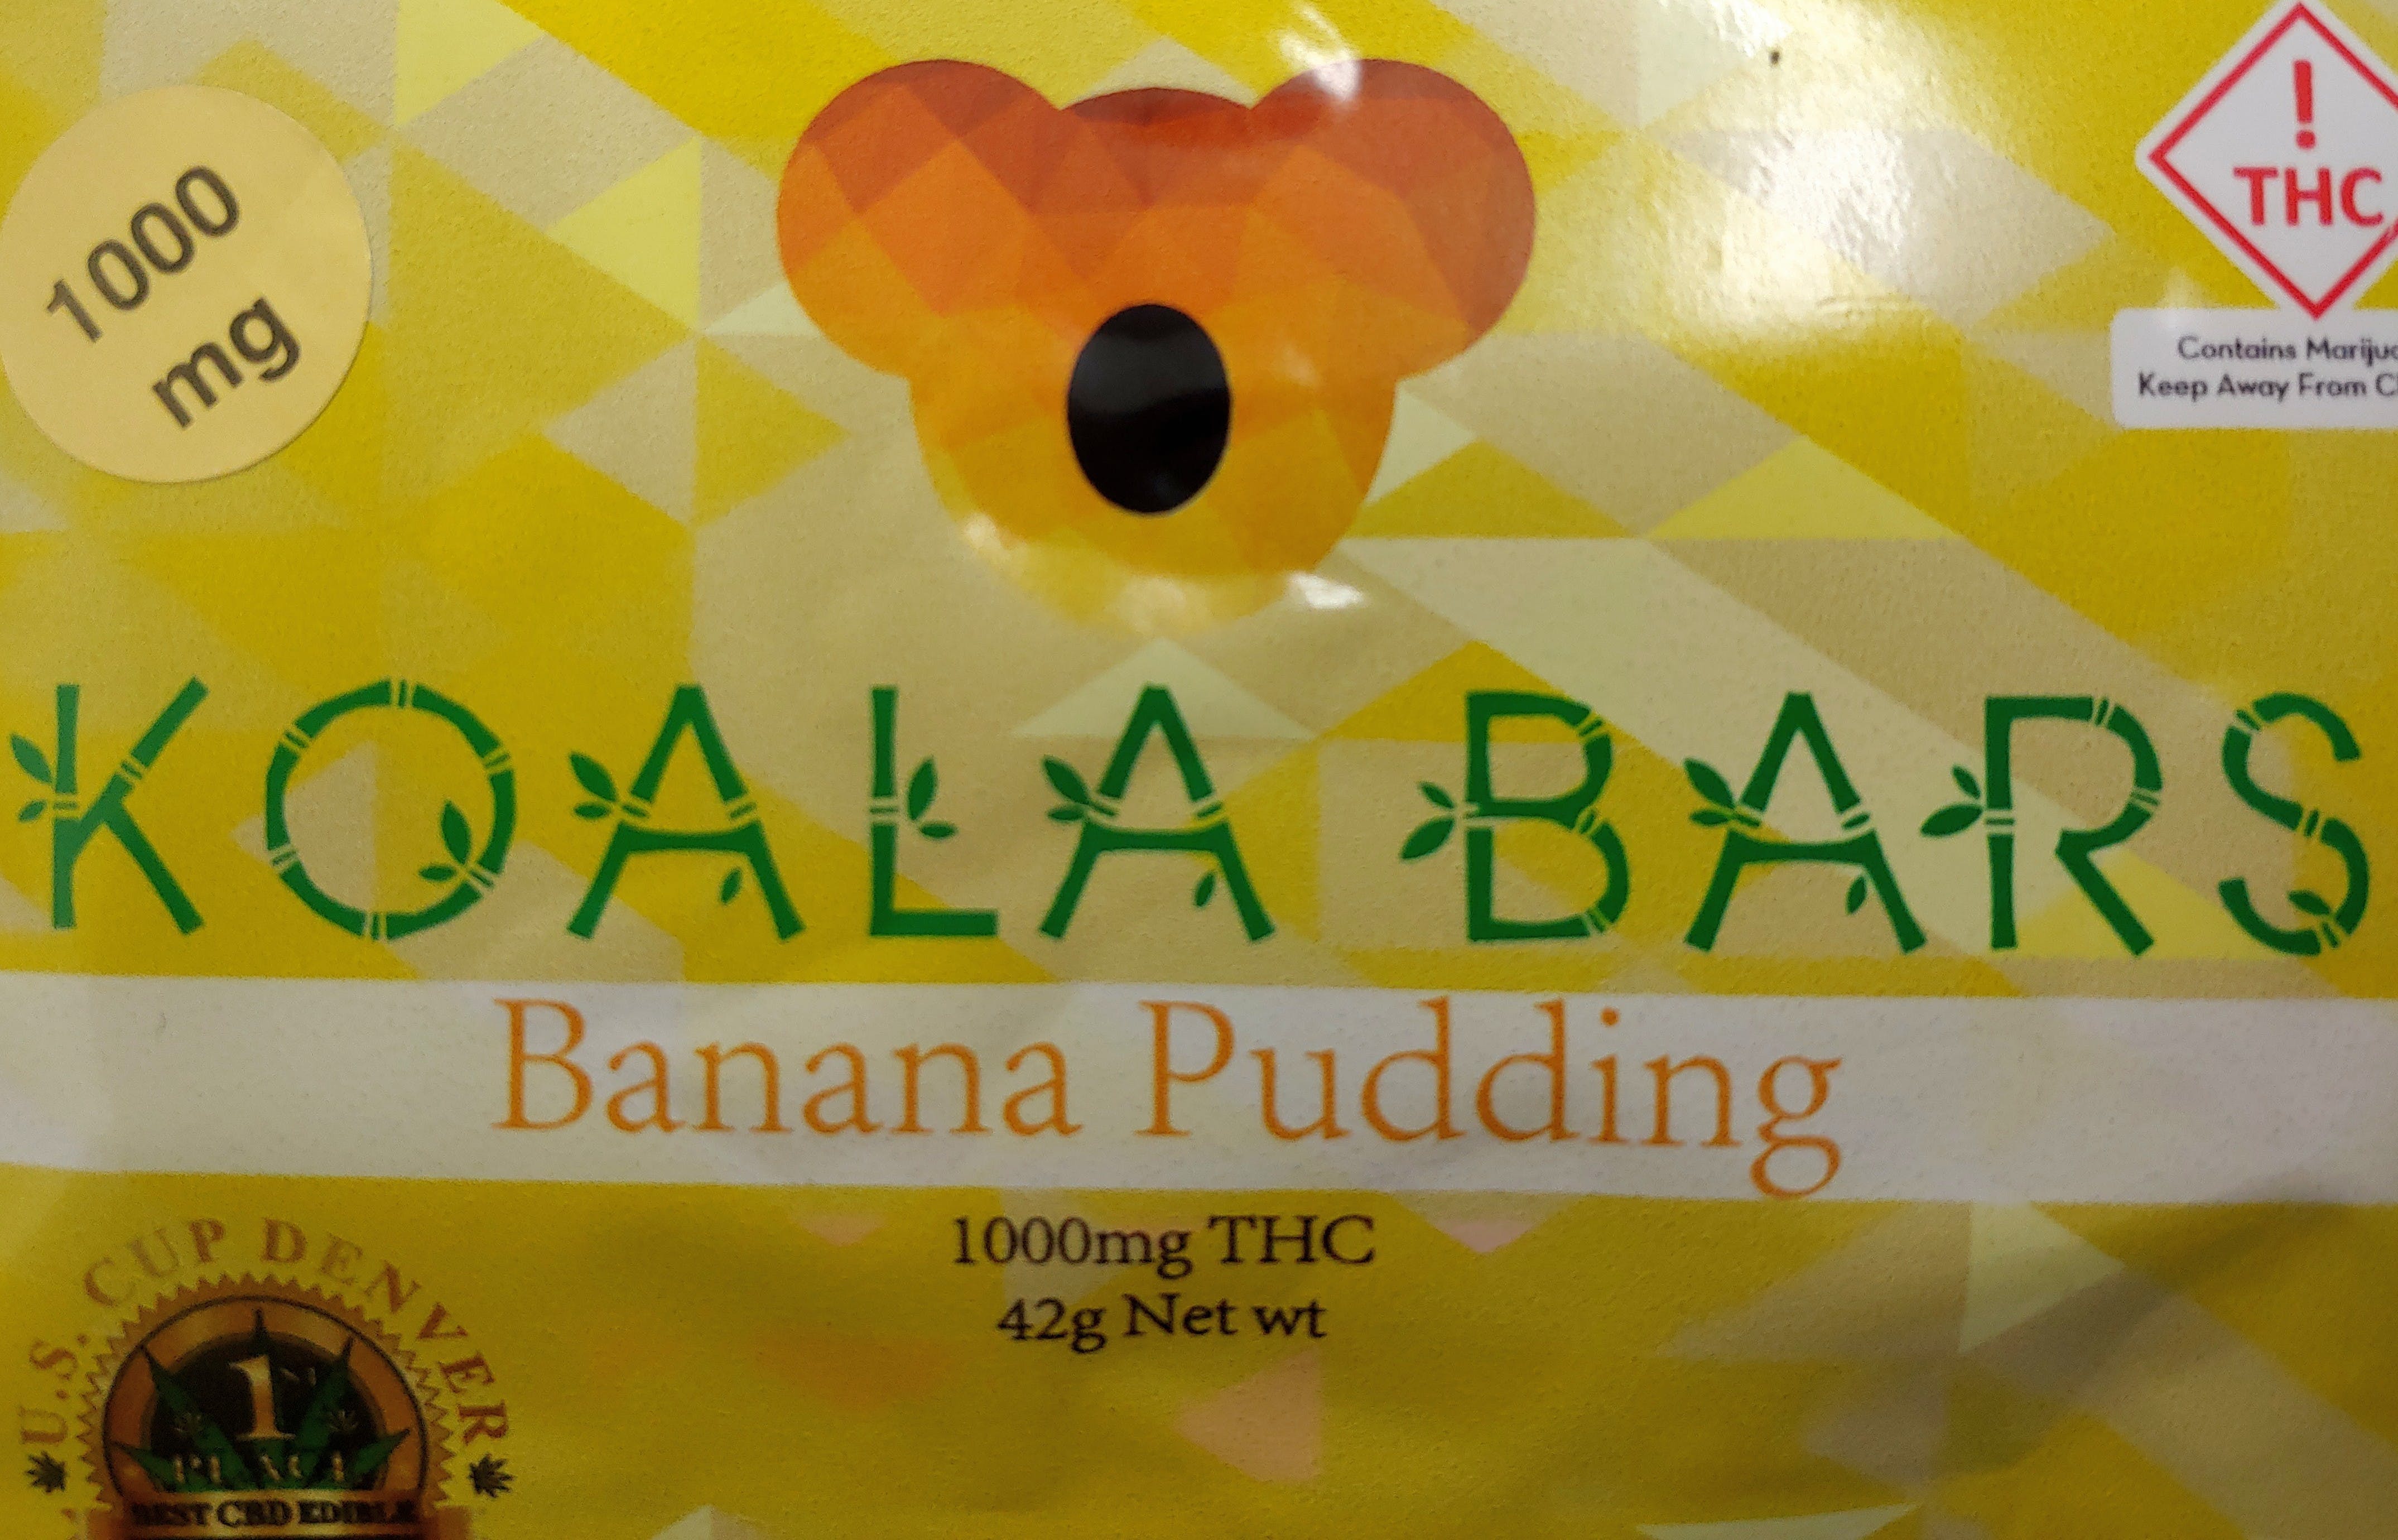 edible-koala-bars-banana-pudding-1000mg